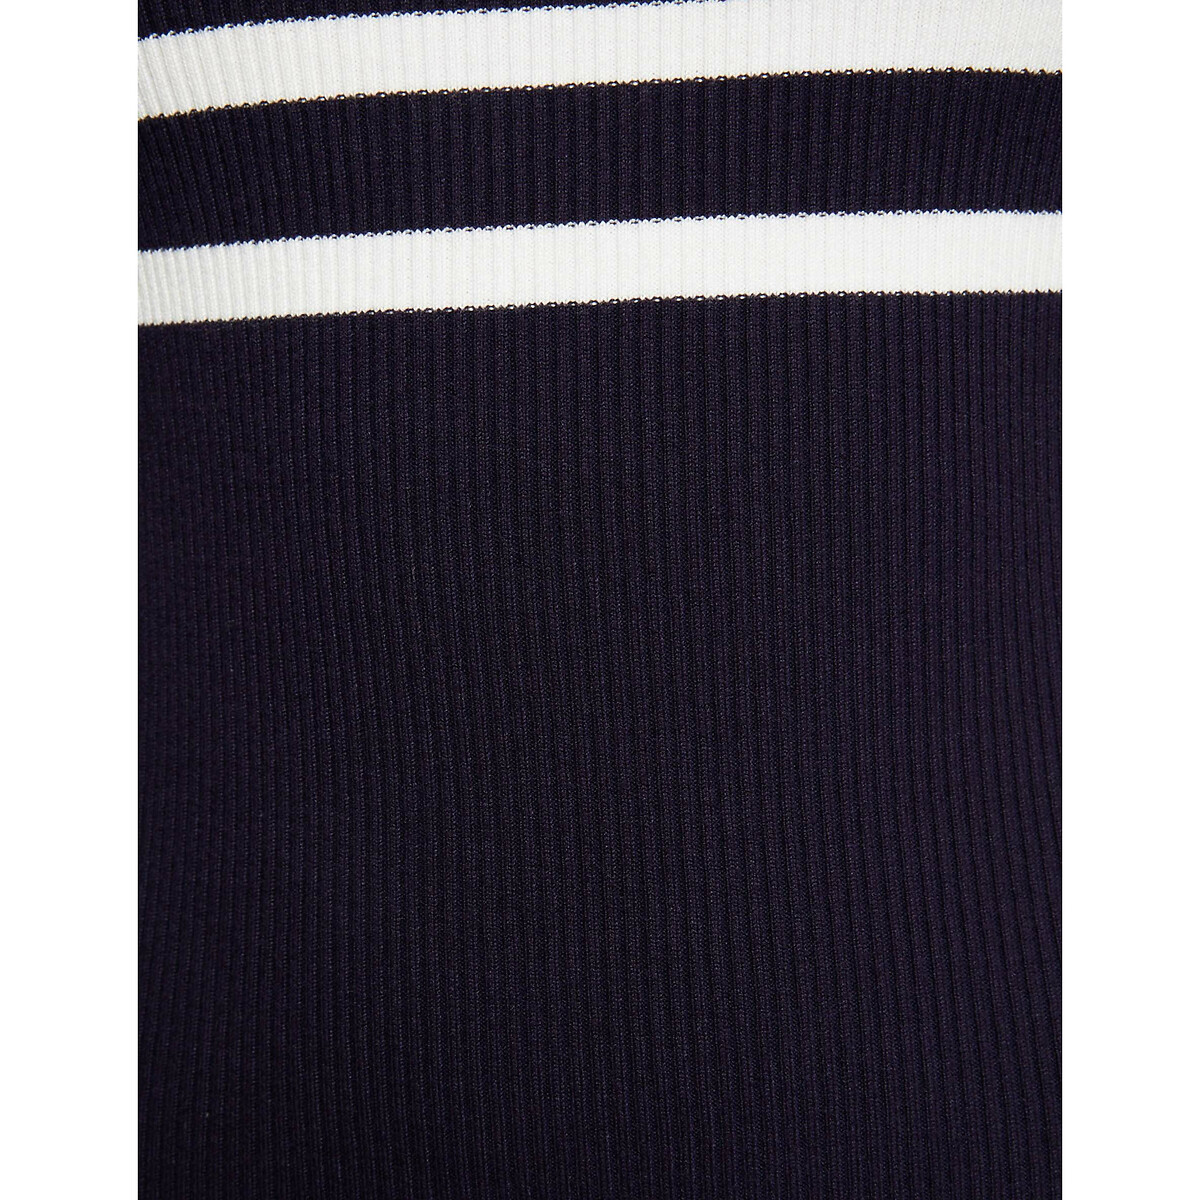 Платье-пуловер приталенное на пуговицах  L синий LaRedoute, размер L - фото 4